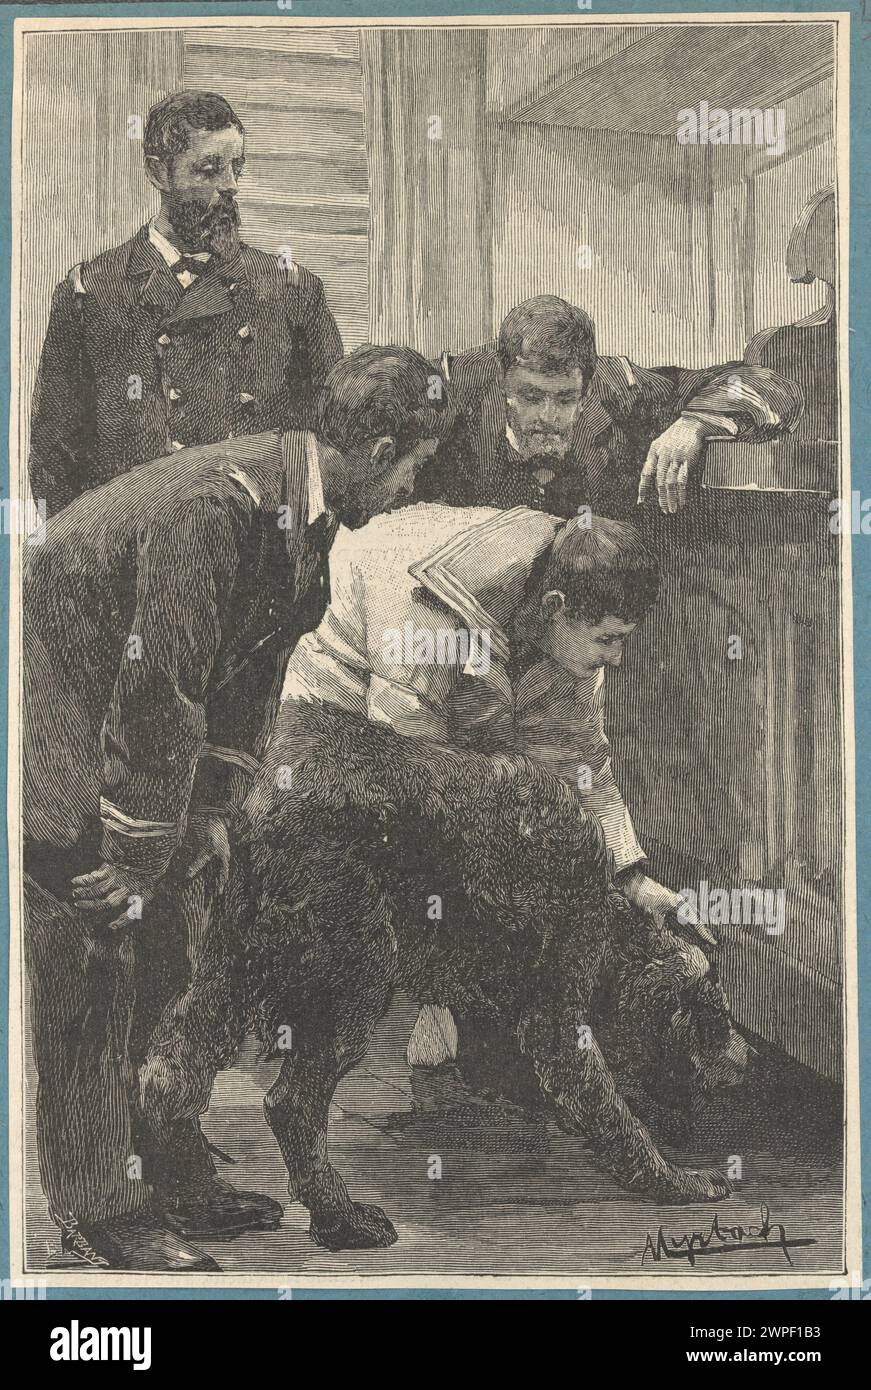 Sailors with a sniffing dog; Barbant, Charles (1844-1922), Myrbach-Rheinfeld, Felician von (1853-1940); 1888 (1888-00-00-1888-00-00); Stock Photo